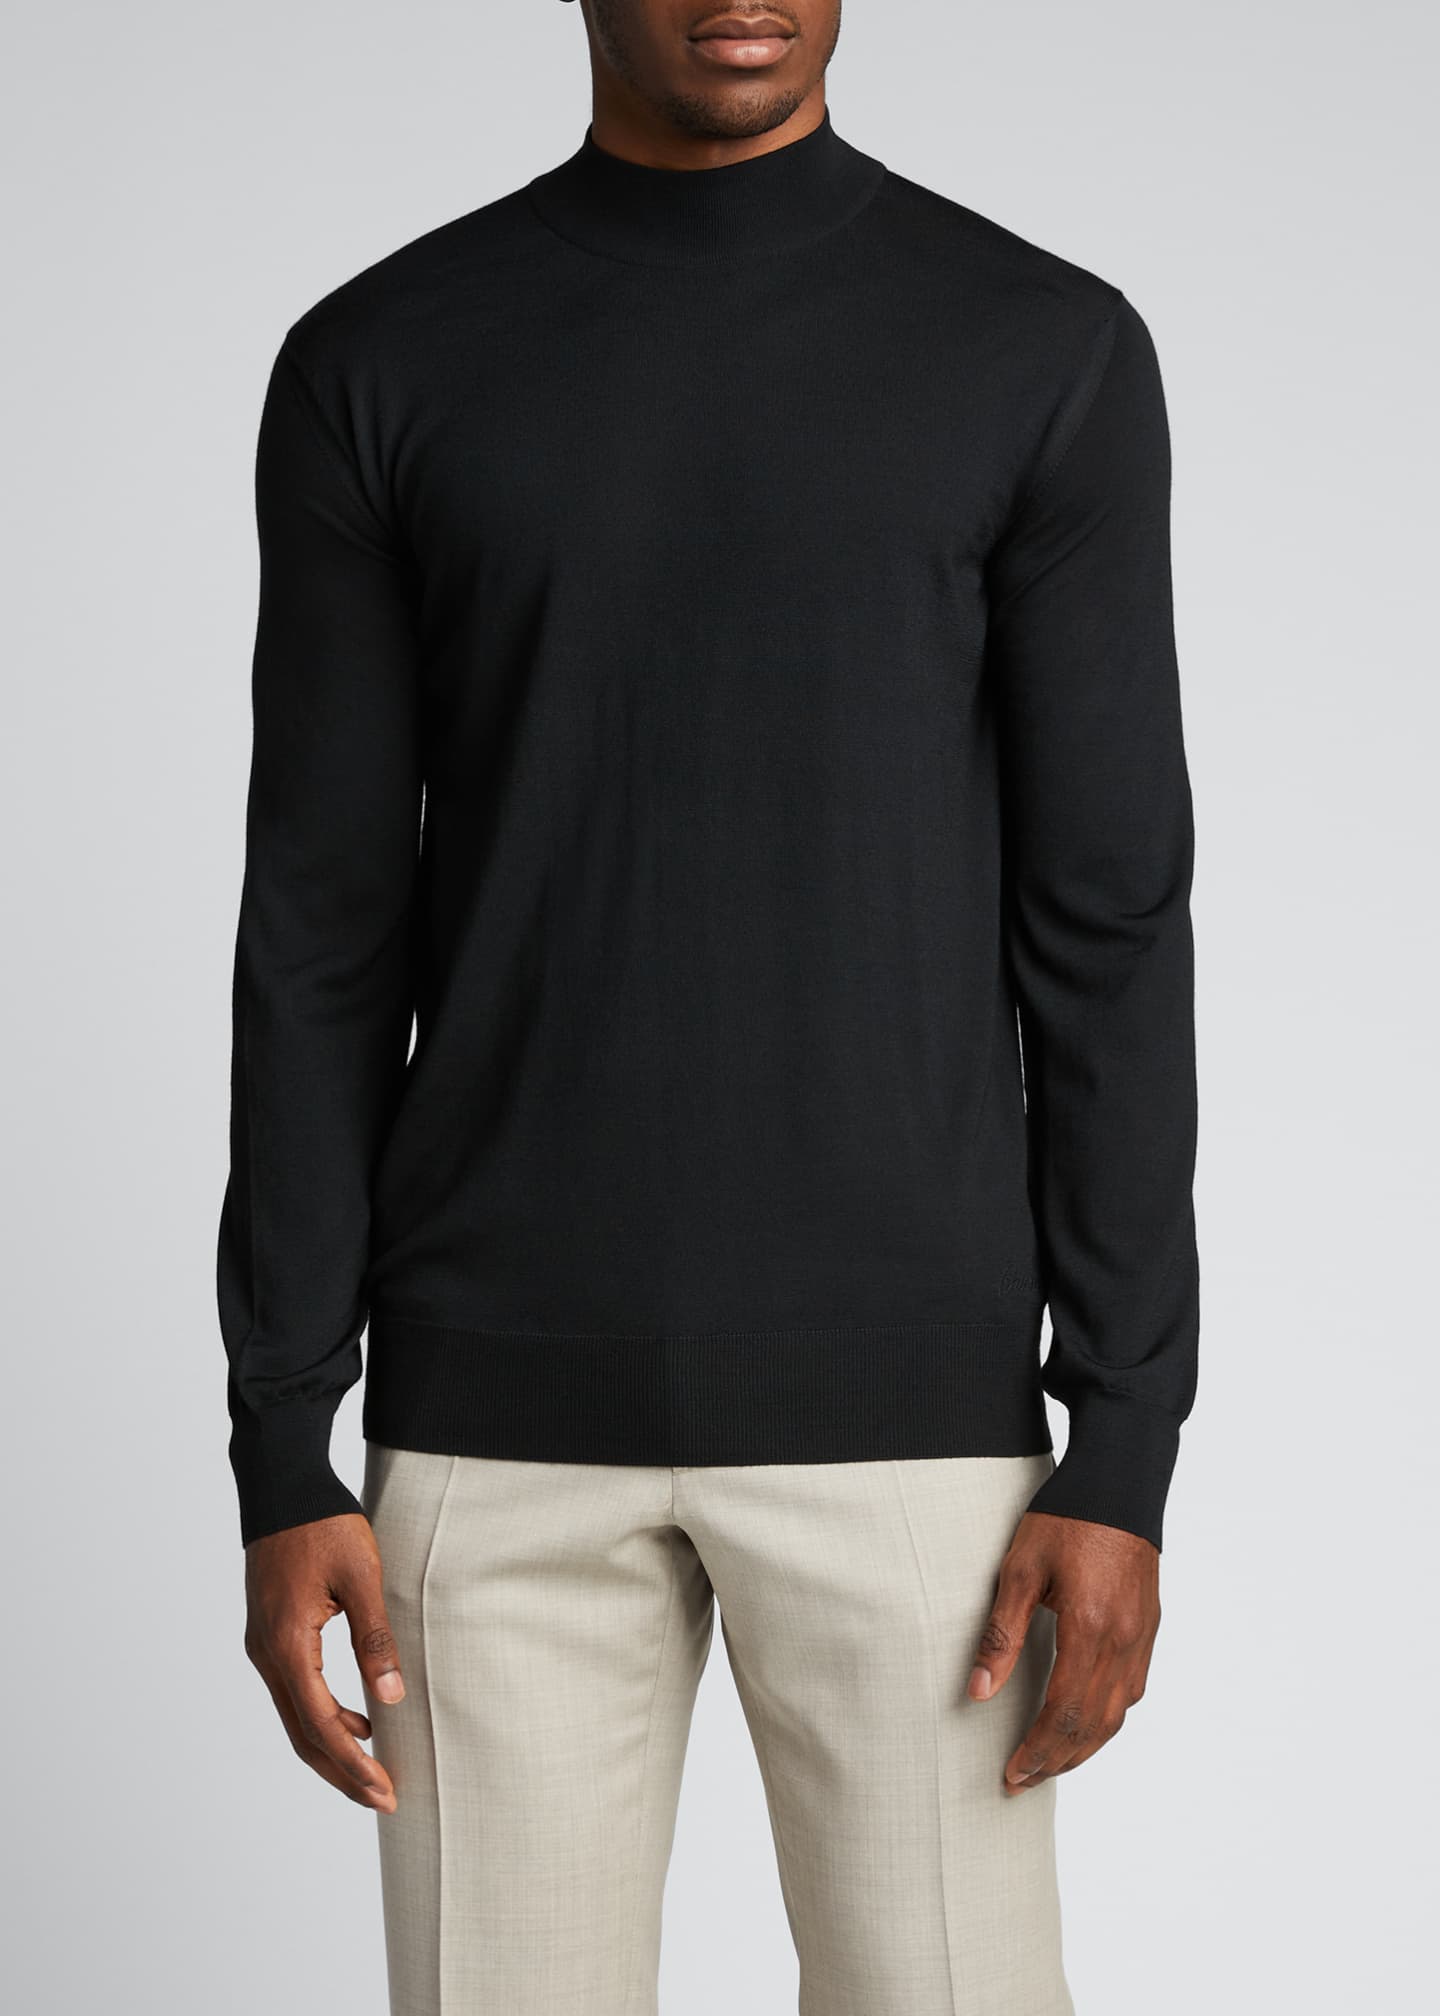 Brioni Men's Solid Mock-Neck Wool Sweater - Bergdorf Goodman